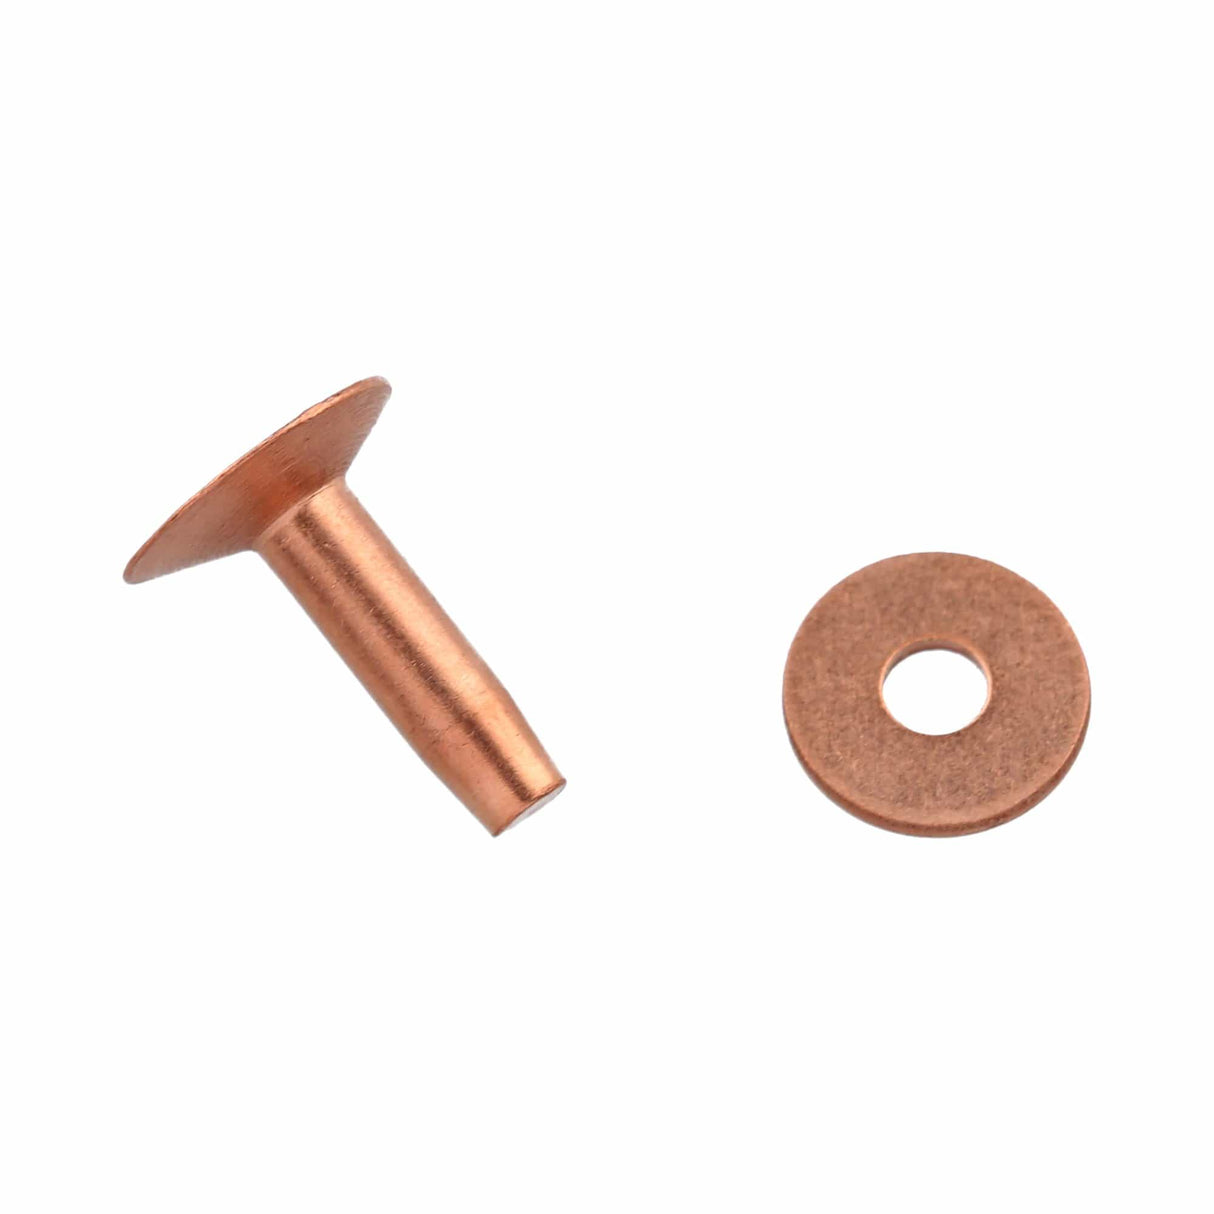 1/8 X 1/2 Round Head Copper Rivets; 100 PCS Box